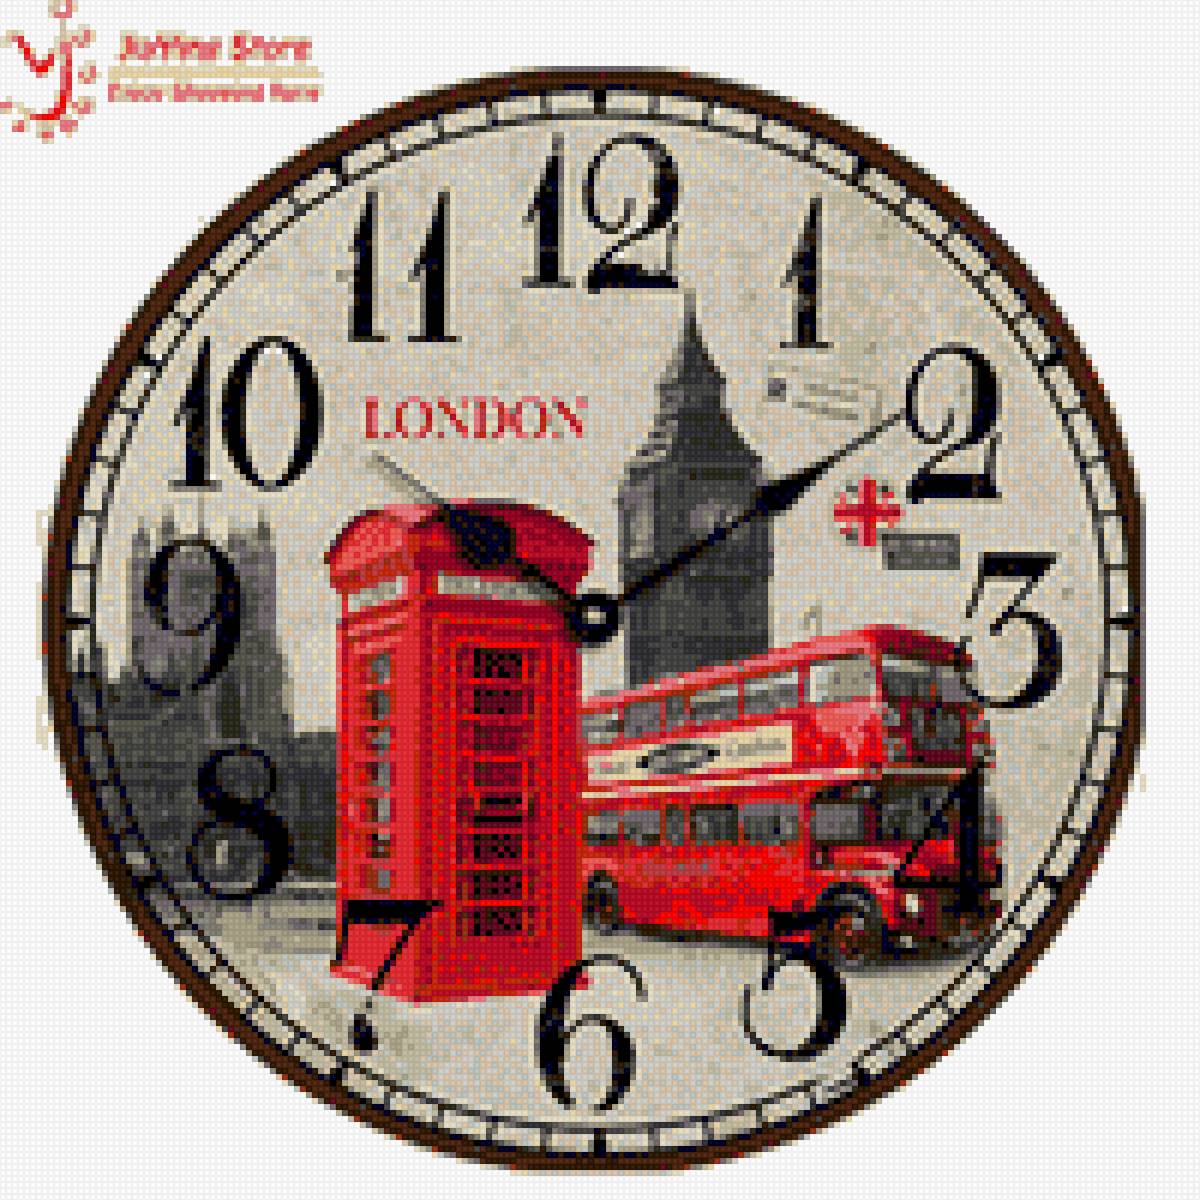 Лондон циферблат - лондон, циферблат, автобус, часы - предпросмотр